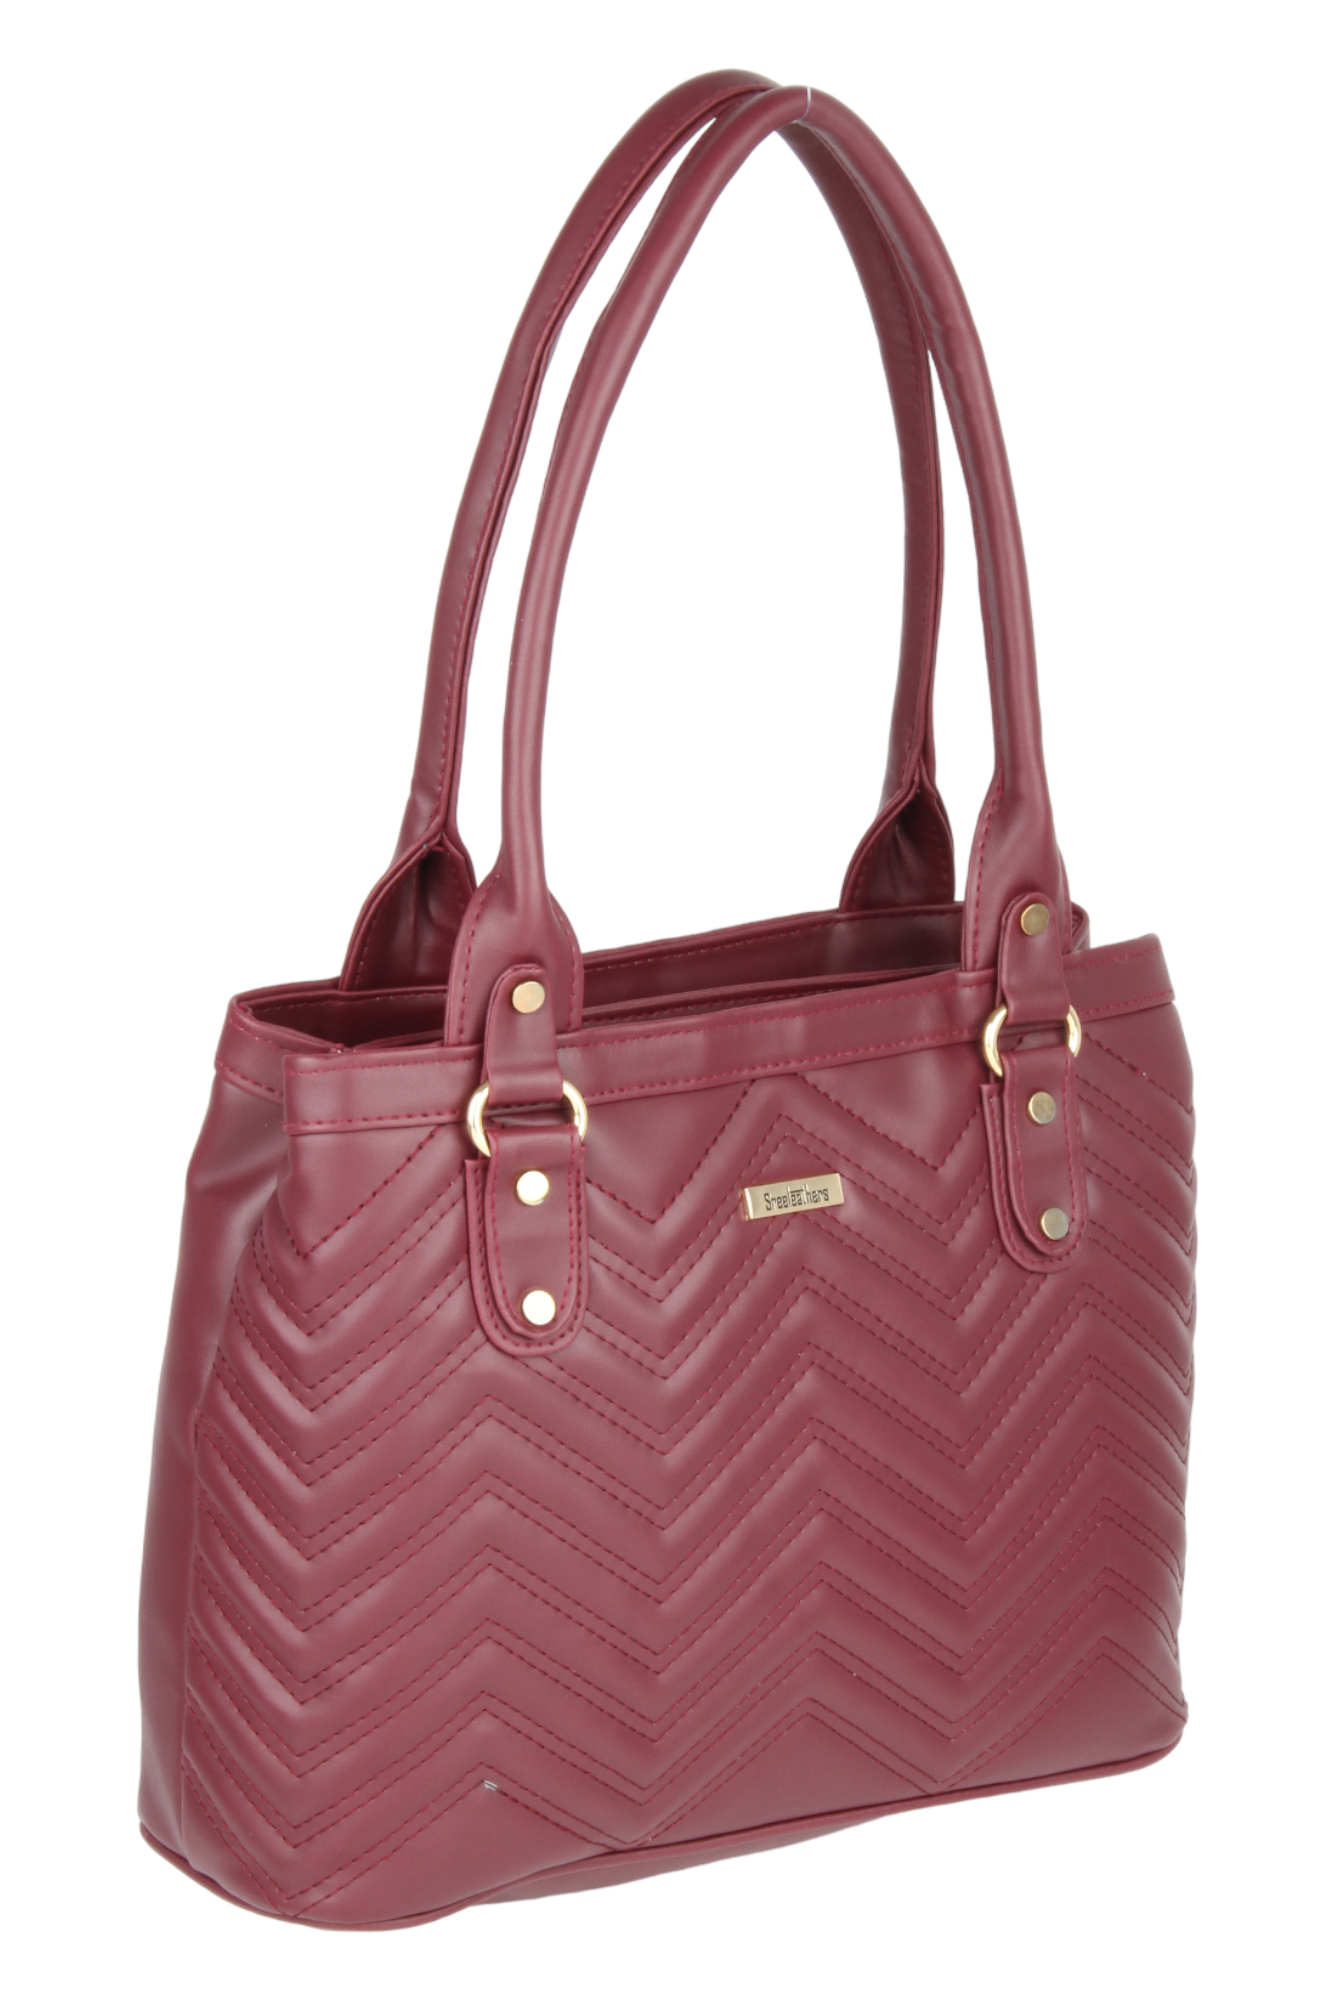 Medium Sized Handbag Shoulder Bag 2 Compartments Zipped Flap Ladies Classic  UK | eBay